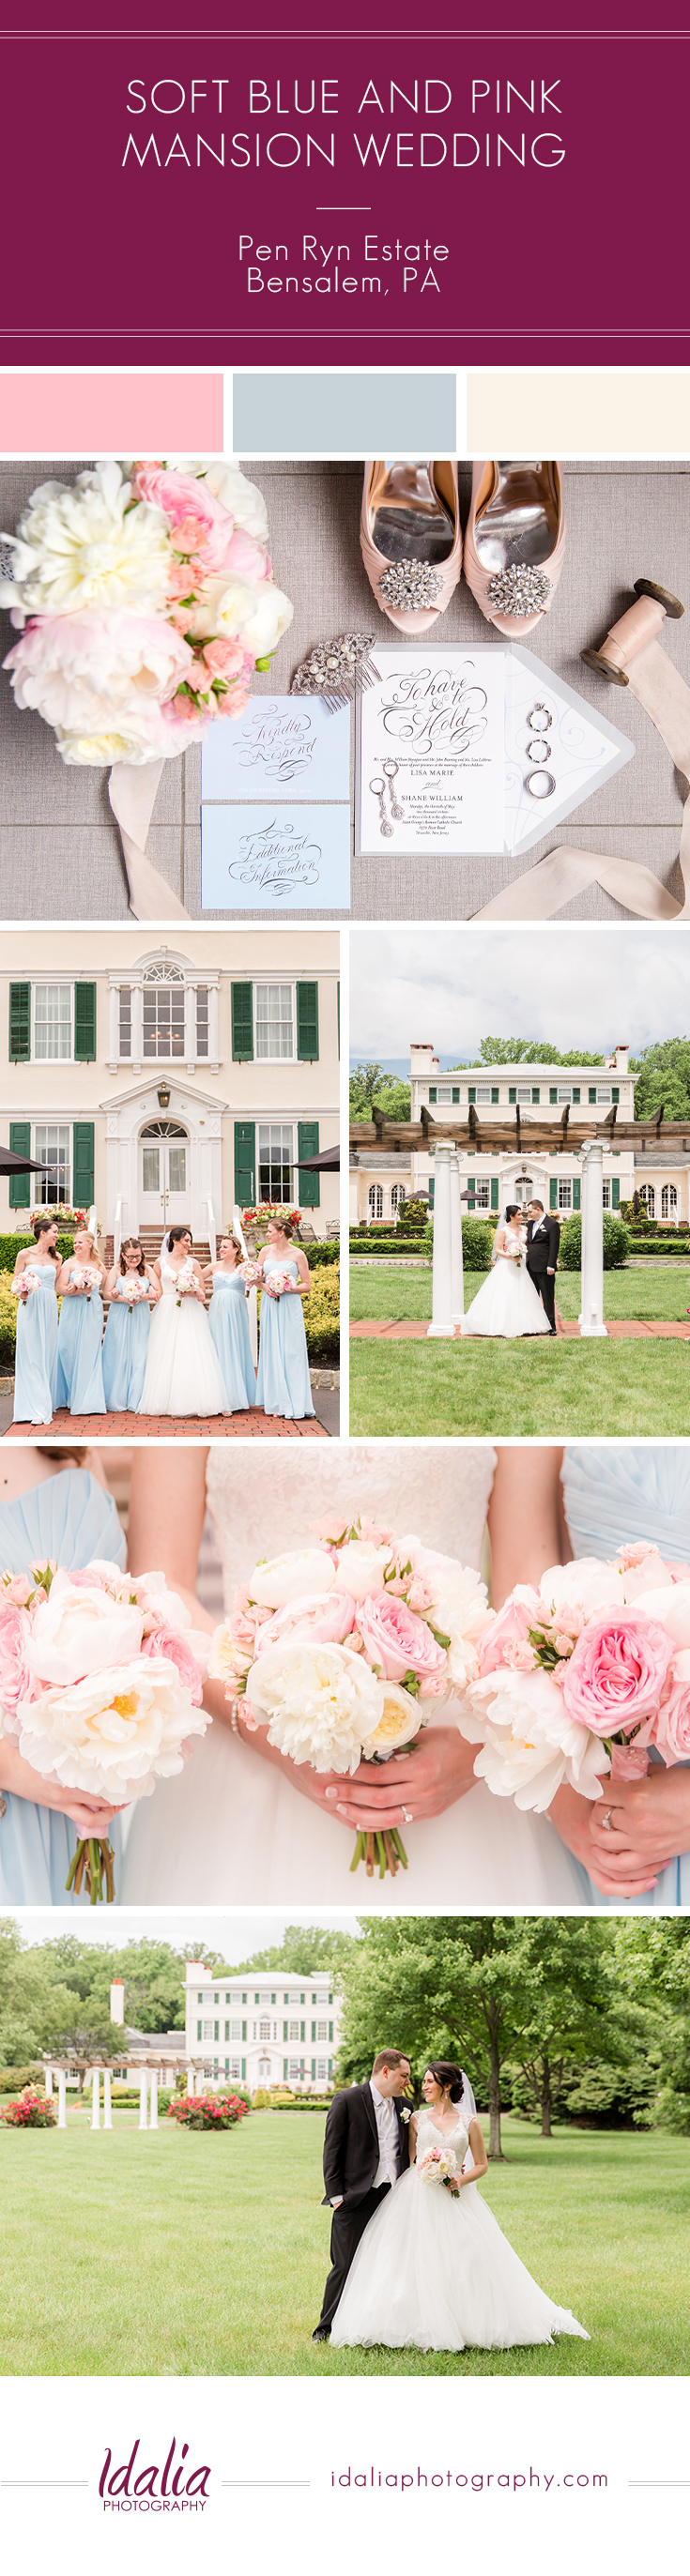 Pen Ryn Mansion Wedding in Bensalem, PA | Photos by Idalia Photography